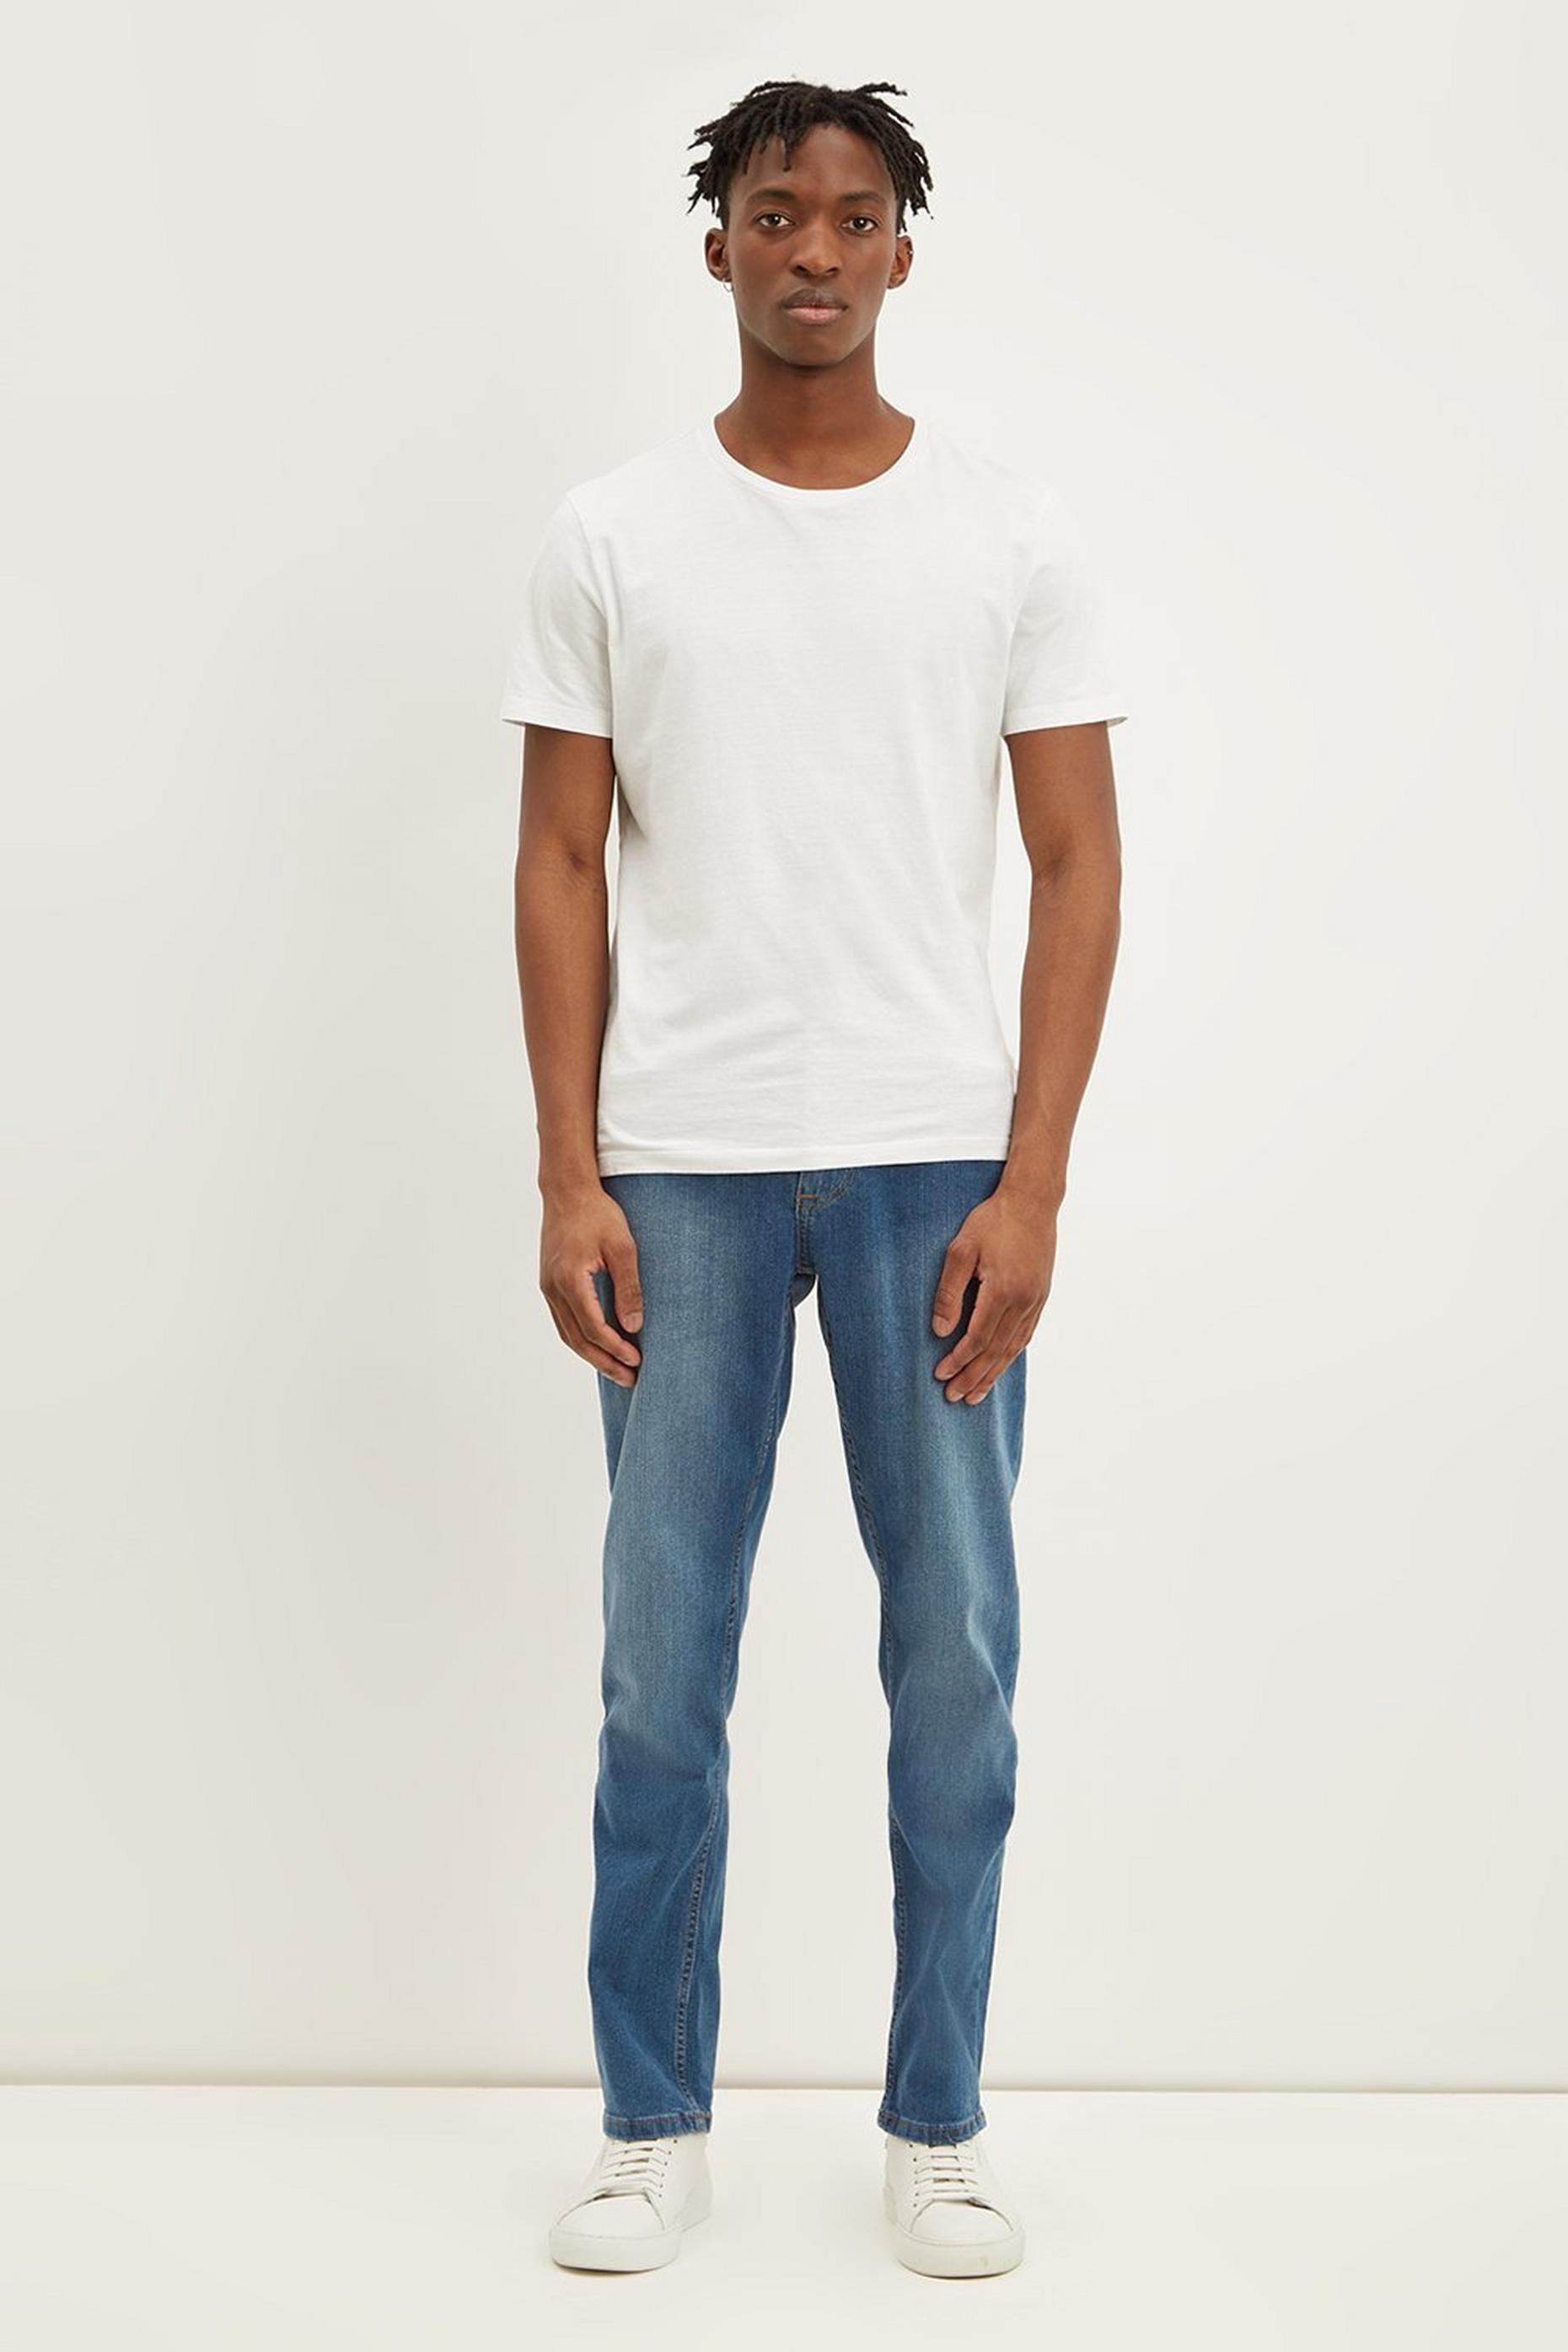 Men's Jeans | Denim Jeans For Men | Burton